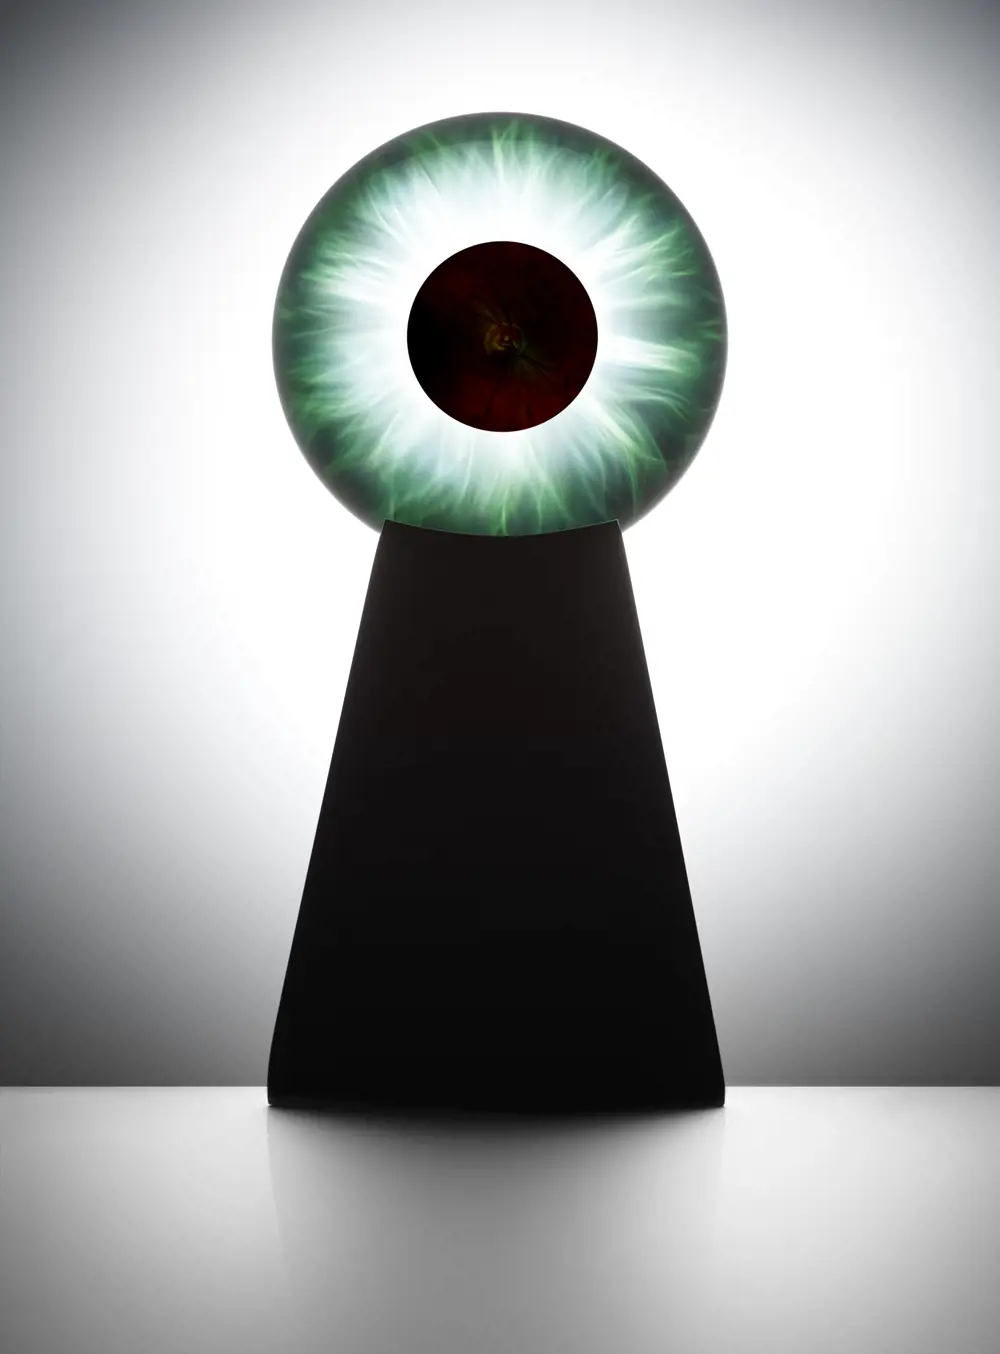 A keyhole shape with a black bottom half and a round top half that looks like an eye